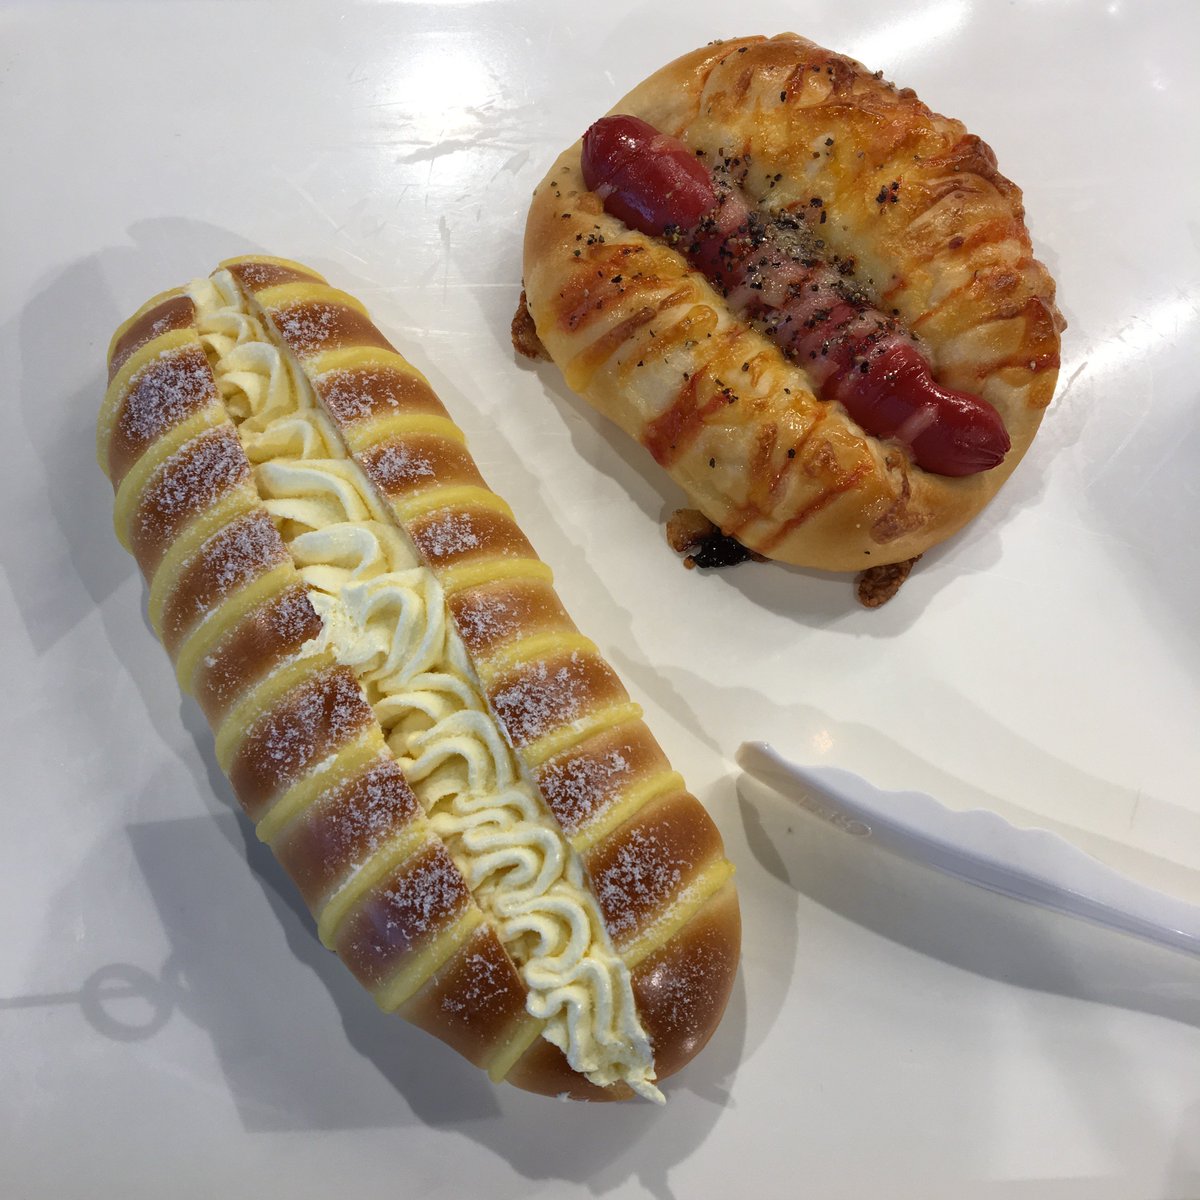 #creamcaterpillar and #hotdogbun .😋 #justforyouthebreadhouse . #delish #breadhouse #bread #perthcoffee #perthcafe #perthbrunch #perthisok #perthfoodie #broadsheetperth #urbanlistperth #perthdaily #perthbreakfast #pertheats #perthdesserts #bakery #perthcbd #パン #perthlunch